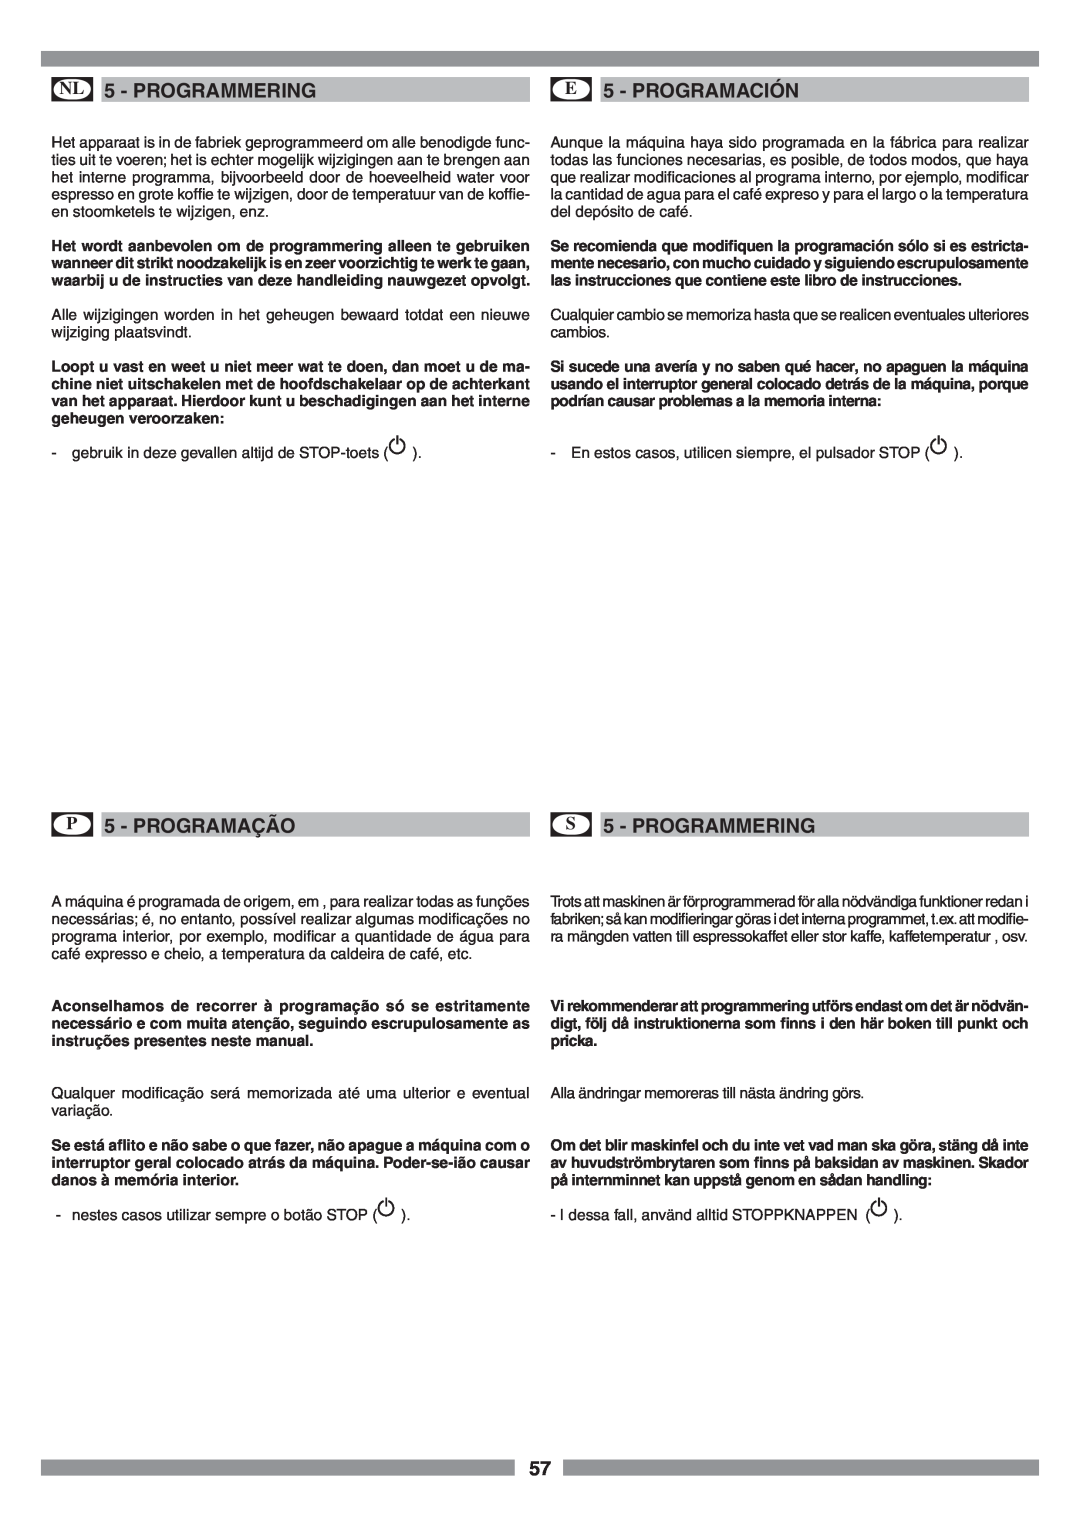 Smeg SCM1 manual NL 5 - PROGRAMMERING, E 5 - PROGRAMACIÓN, P 5 - PROGRAMAÇÃO, S 5 - PROGRAMMERING 